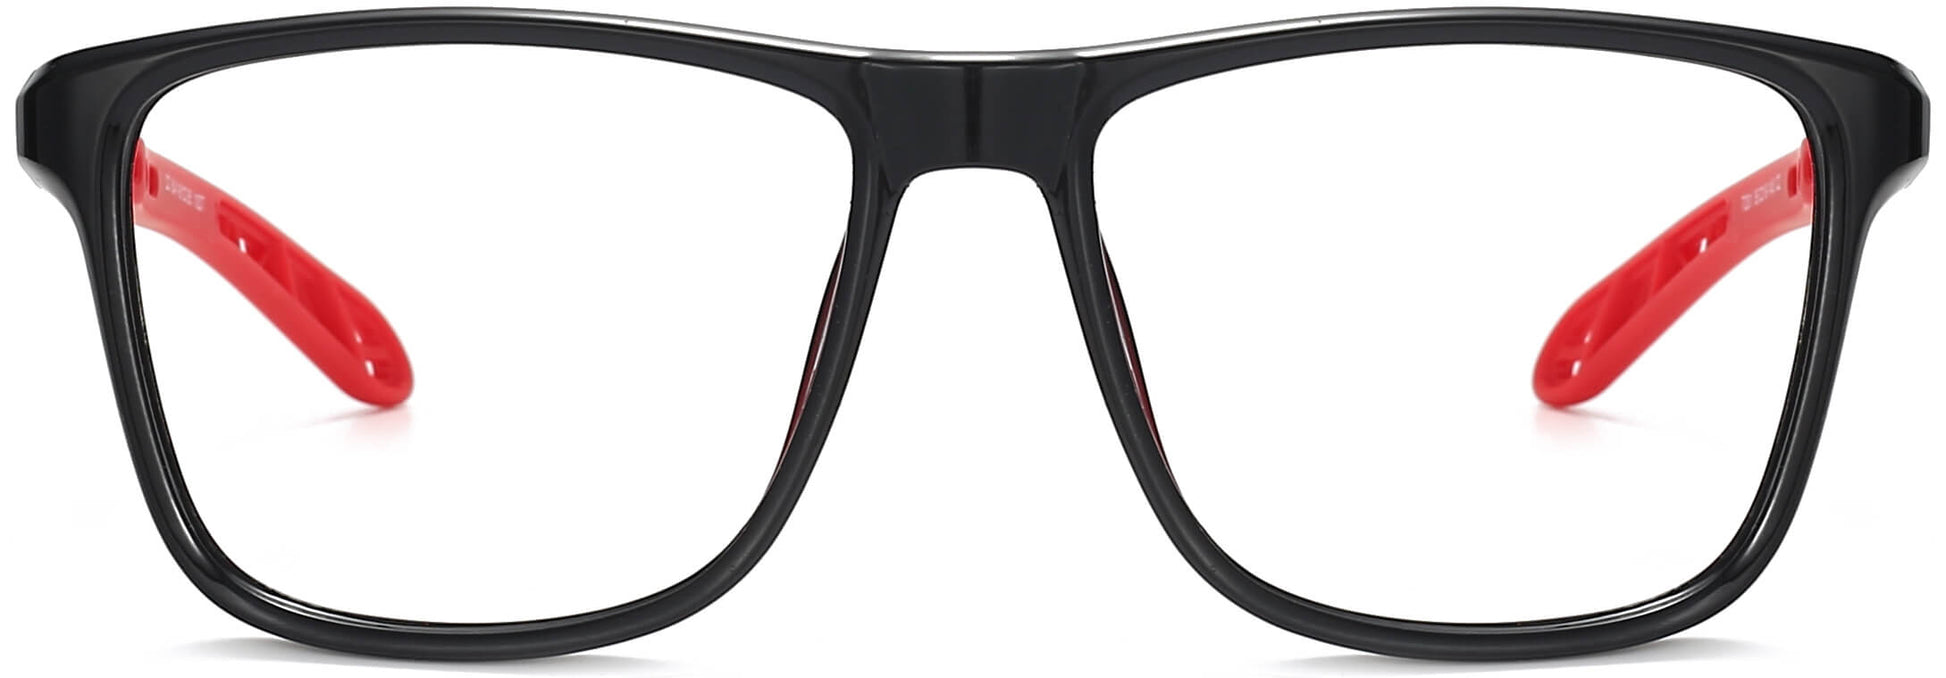 Brendan Square Black Eyeglasses from ANRRI, front view